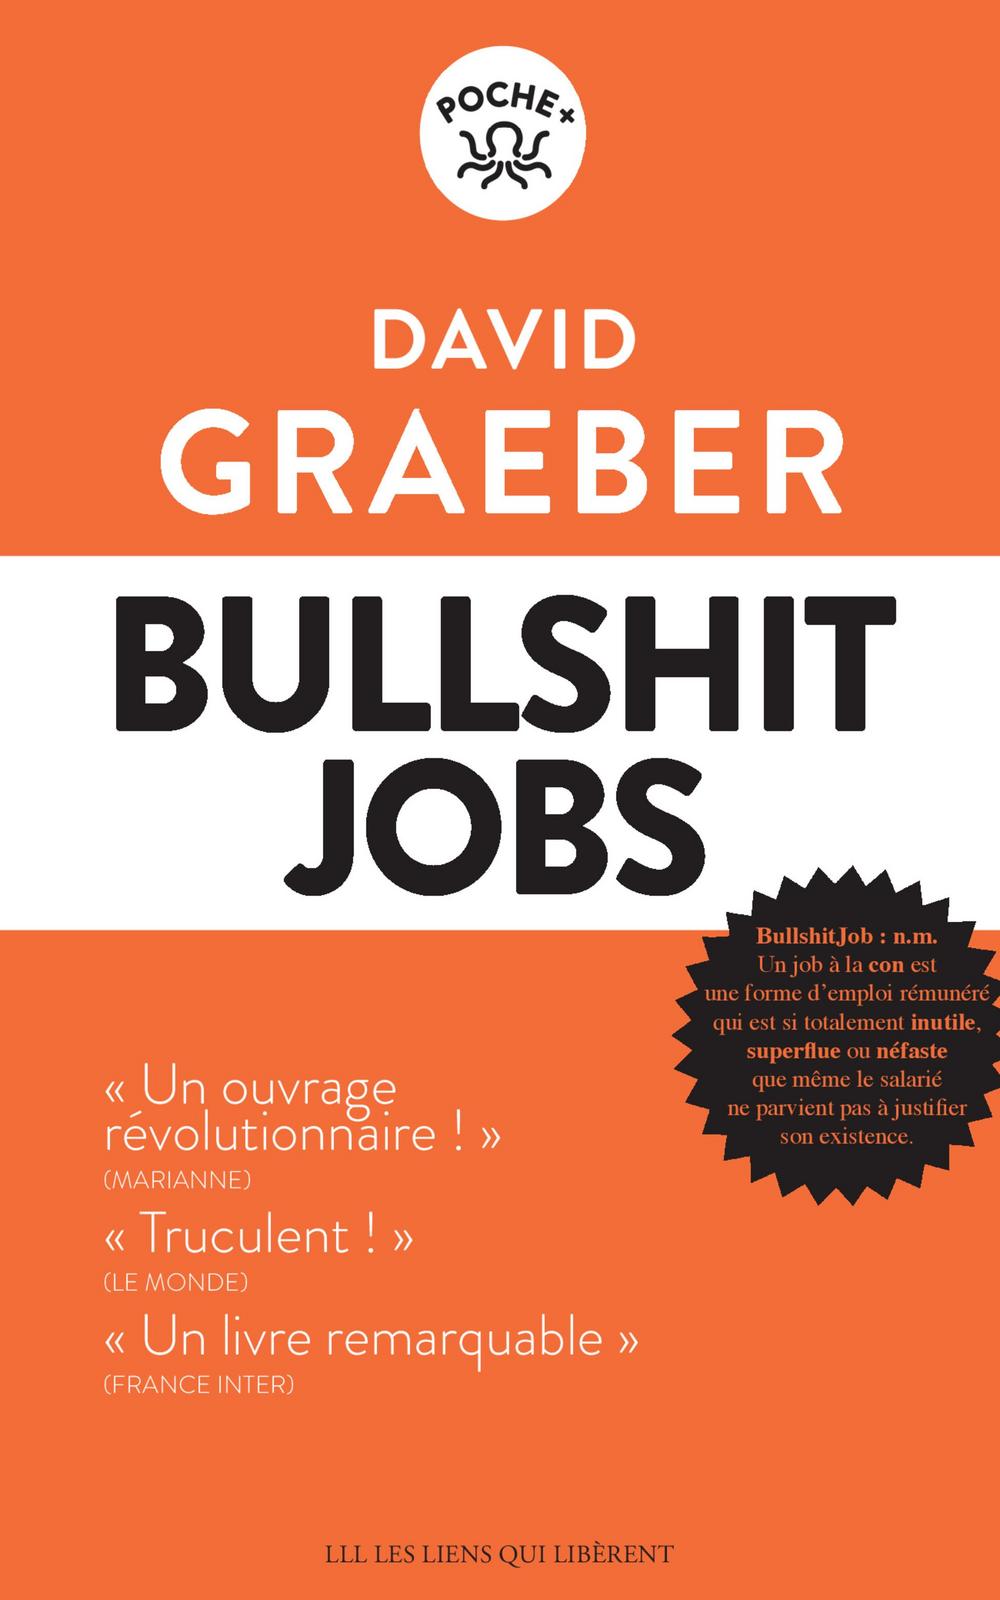 David Graeber: Bullshit jobs (French language, 2019)